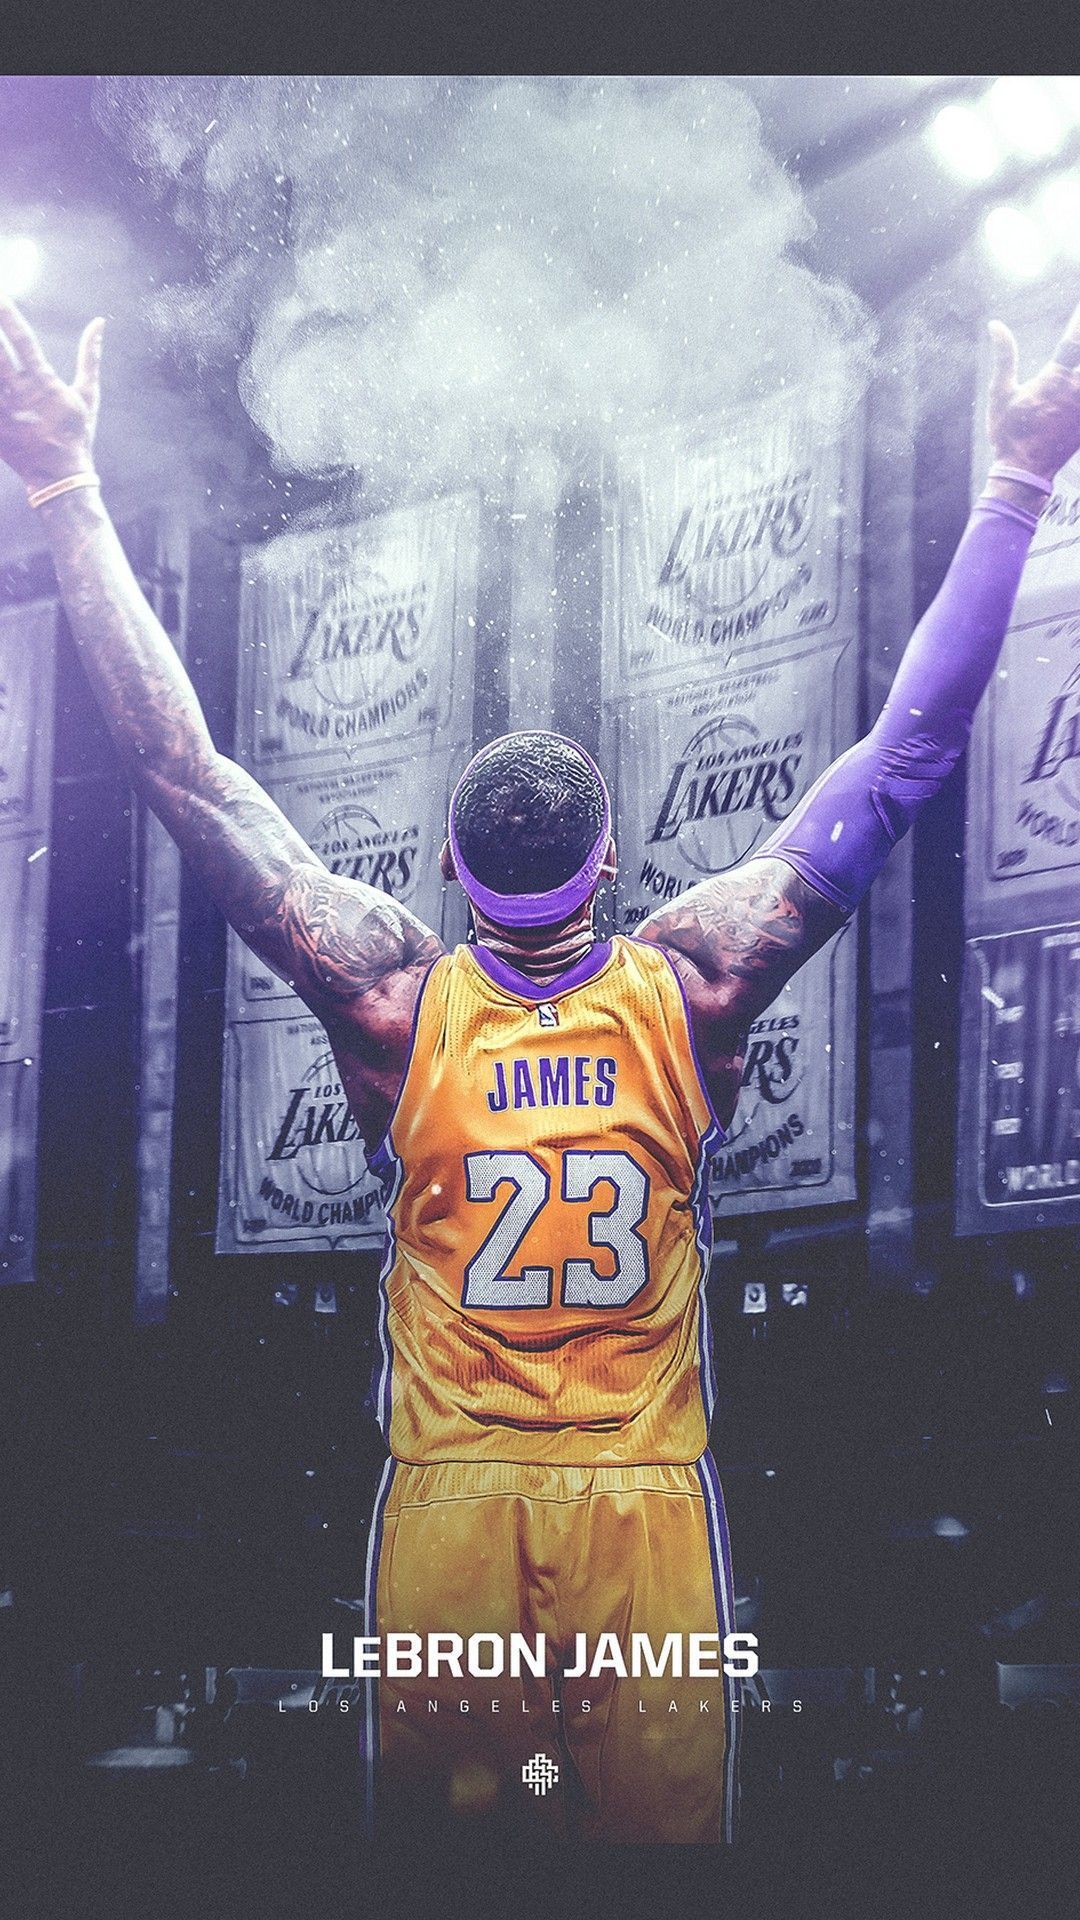 LeBron James LA Lakers HD Wallpaper For iPhone. Lebron james wallpaper, Basketball wallpaper hd, Lebron james poster